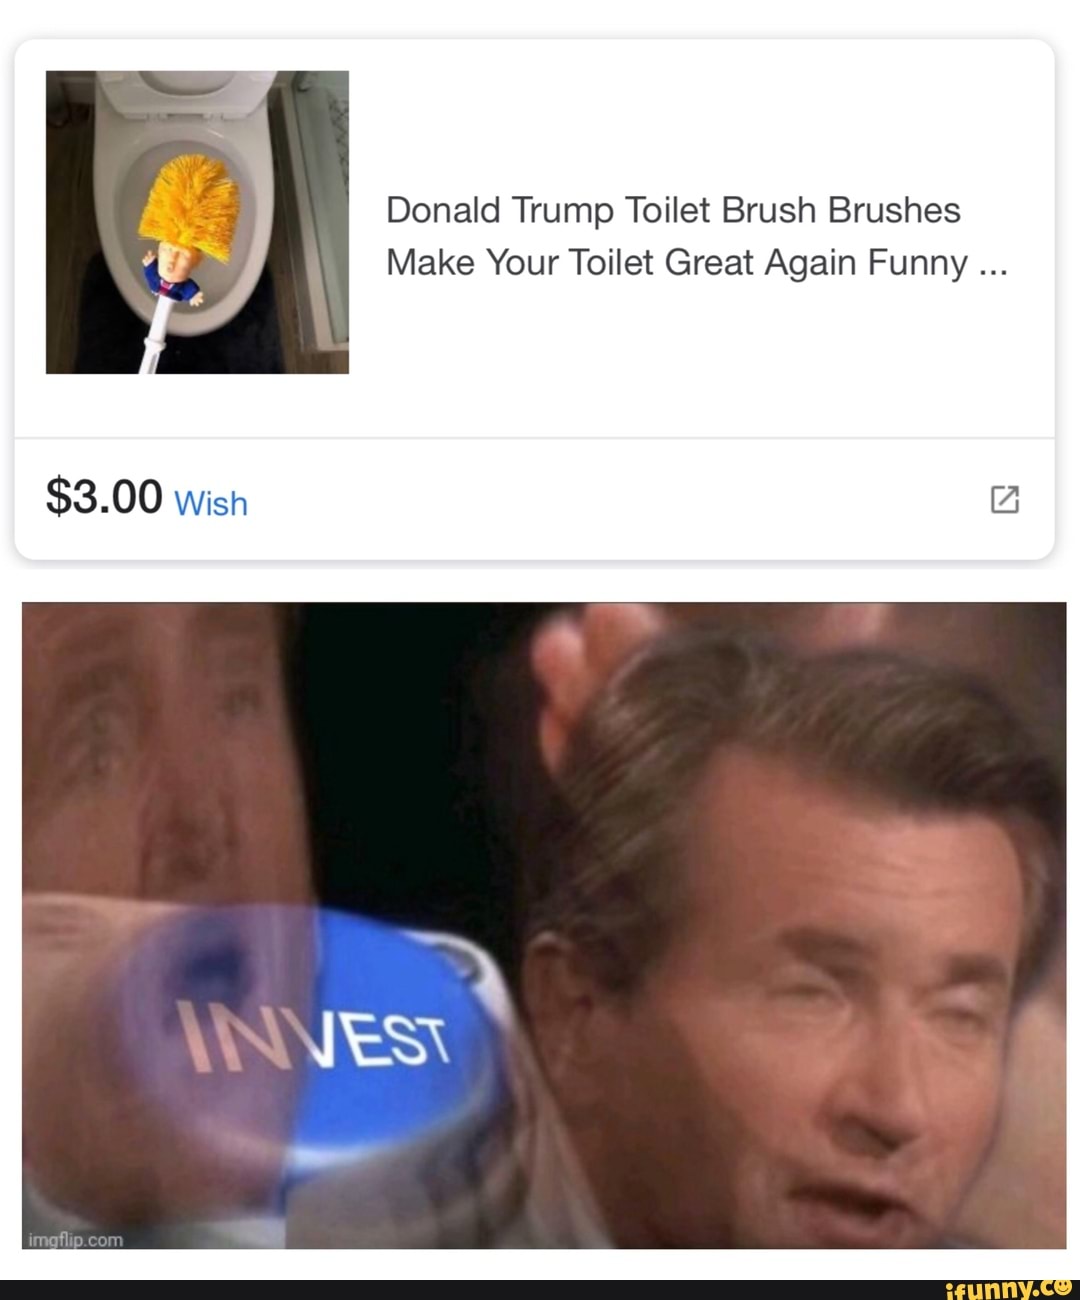 Donald Trump Toilet Brush Brushes Make Your Toilet Great Again Funny $3